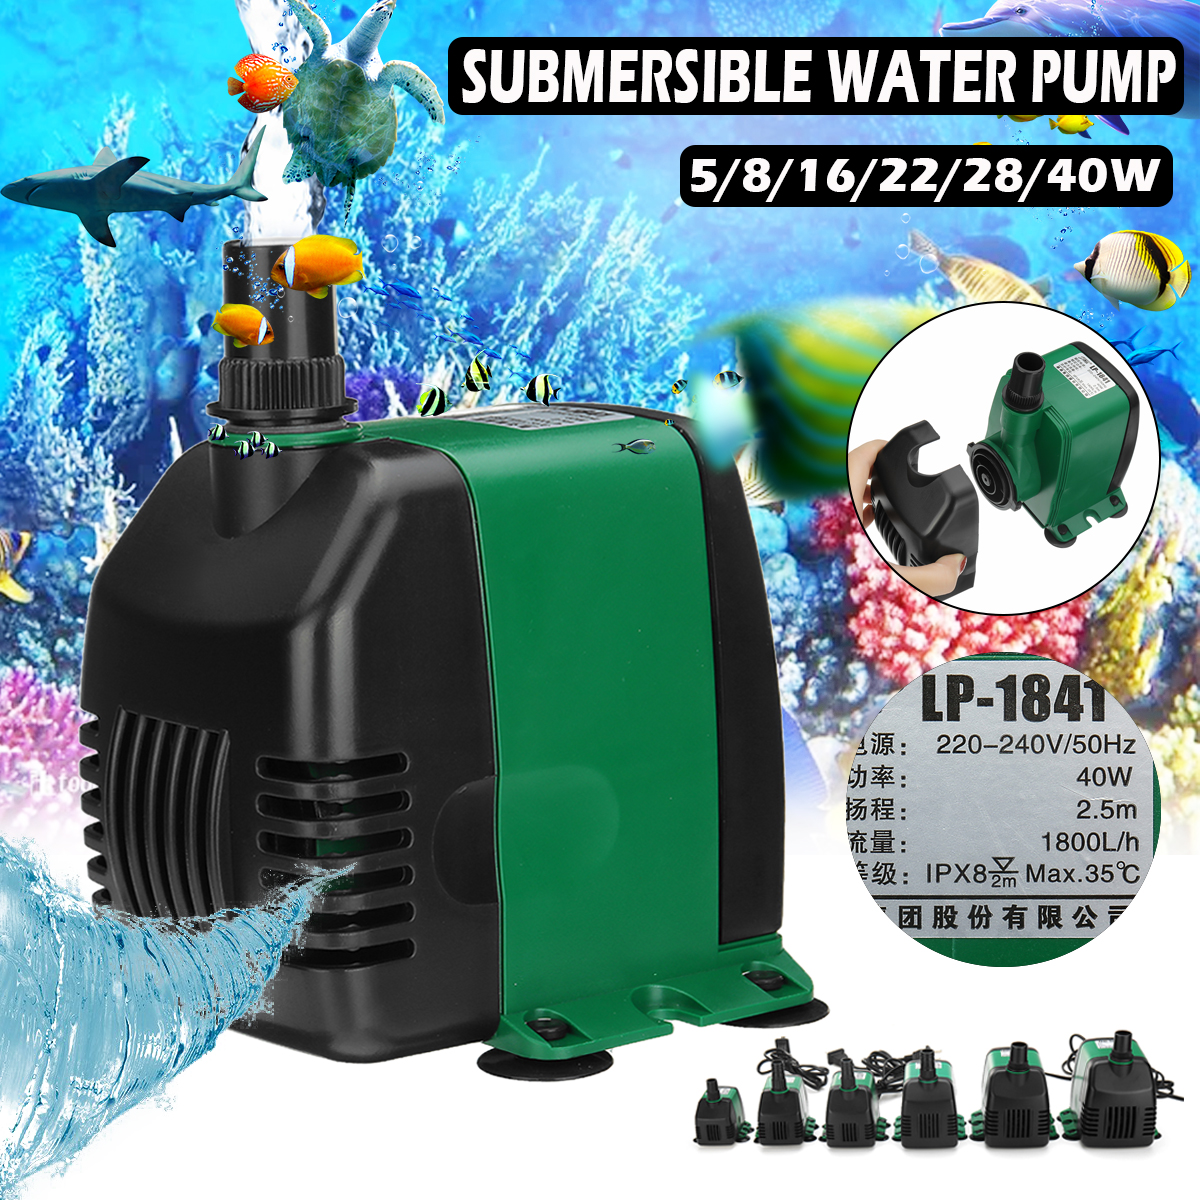 5816222840W-Submersible-Water-Pump-Low-Noise-Durable-Aquarium-Fish-Tank-Fountain-Pump-1573799-2